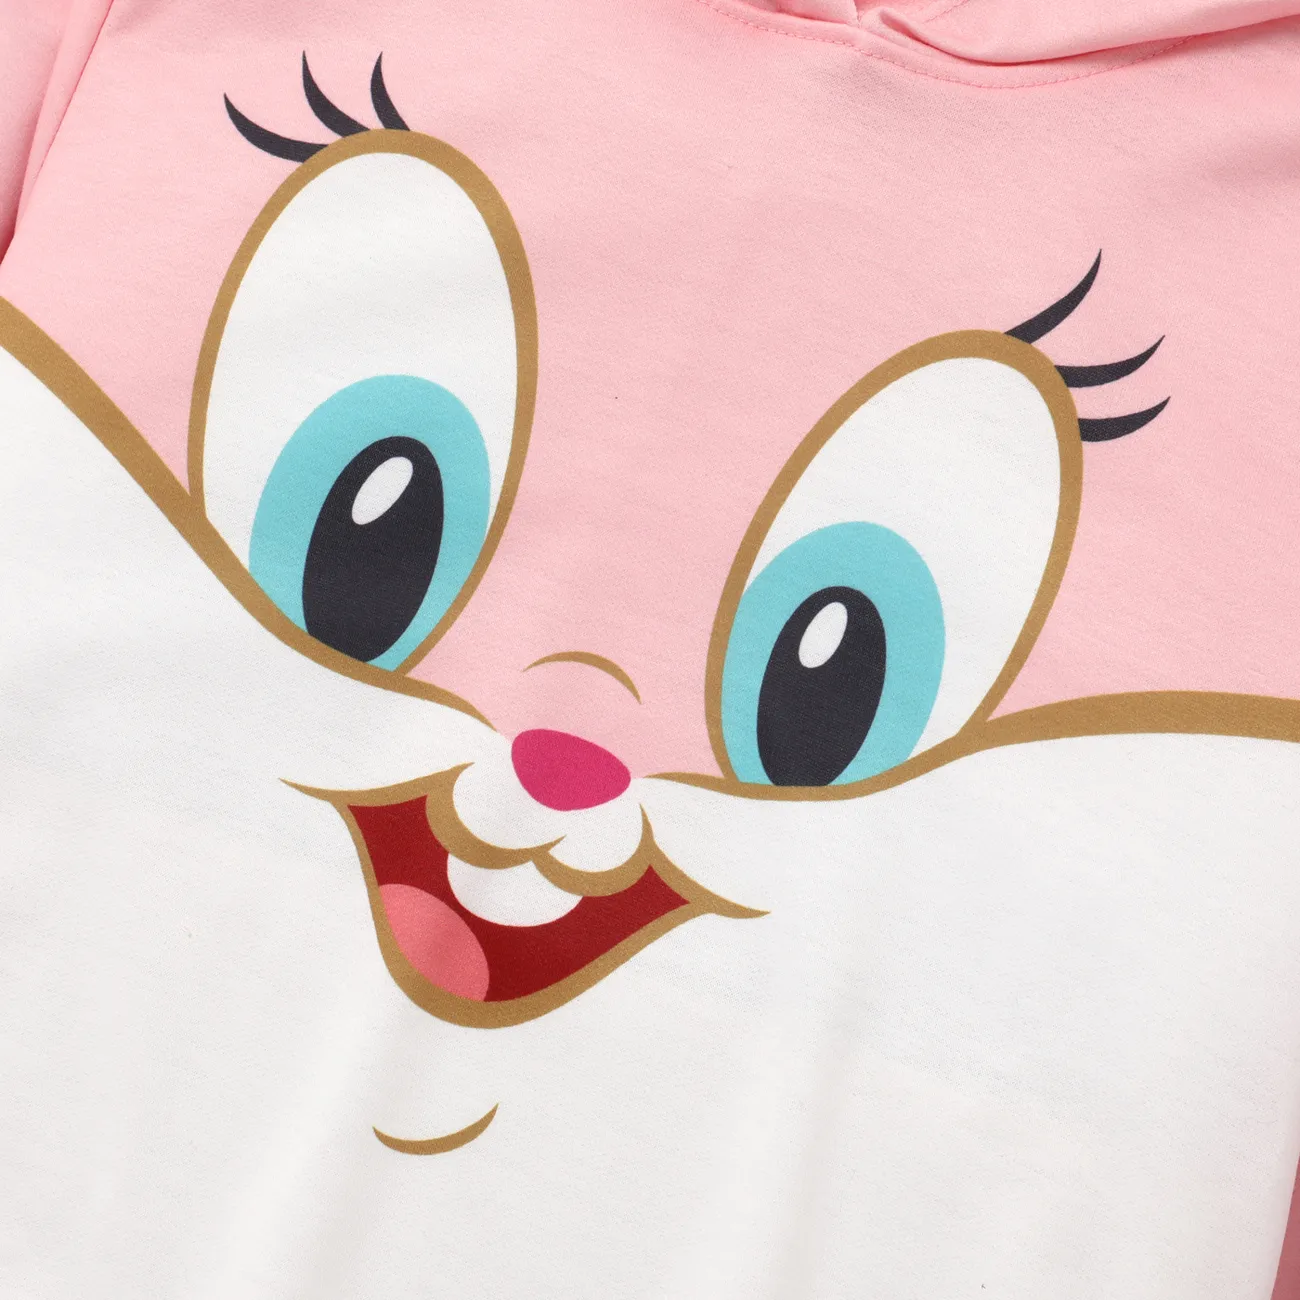 Looney Tunes Unisex Mit Kapuze Kindlich Sweatshirts rosa big image 1